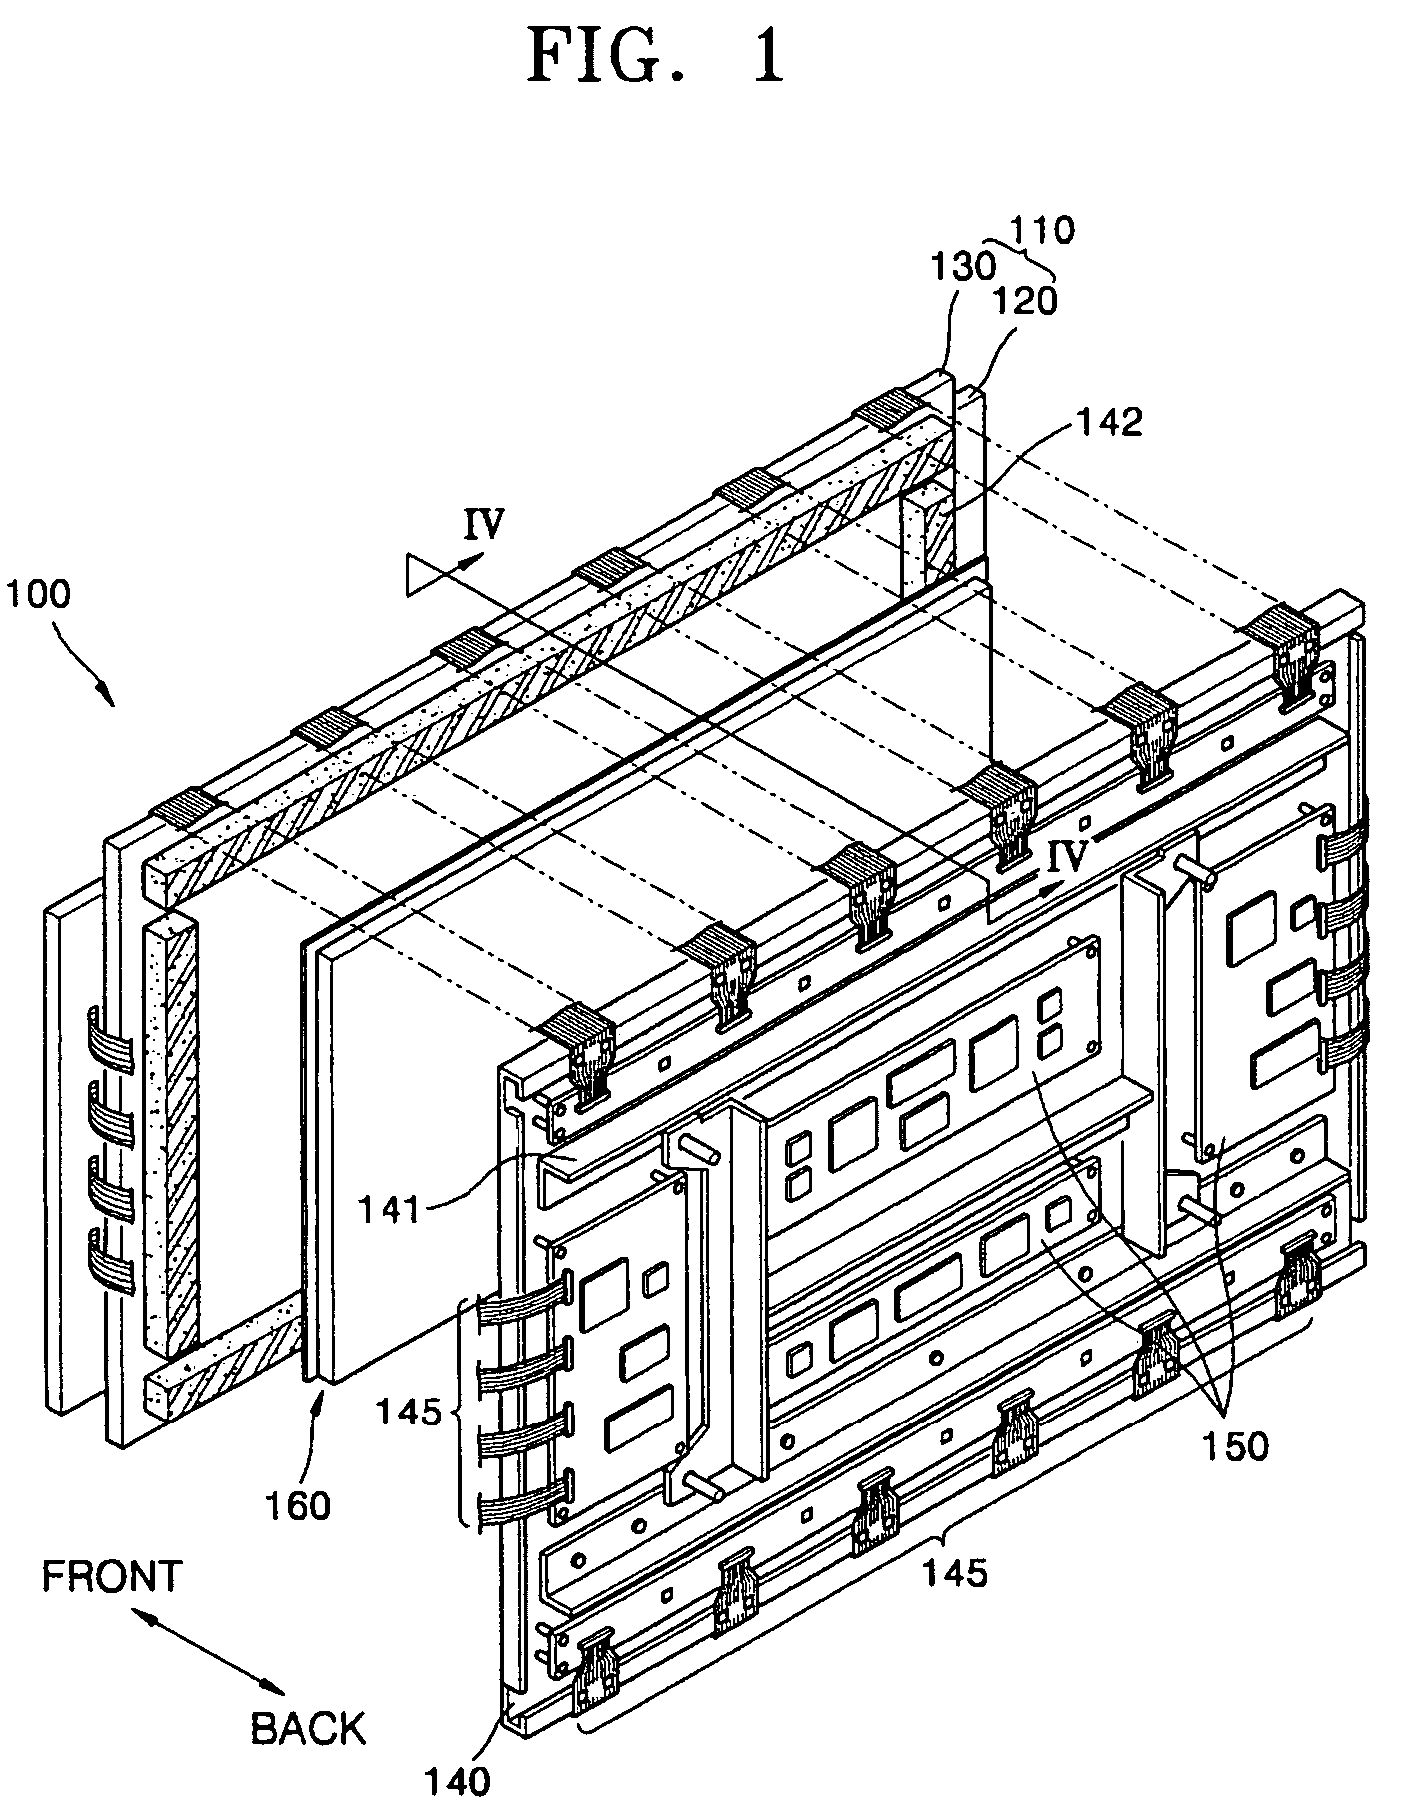 Heat dissipation unit for a plasma display apparatus